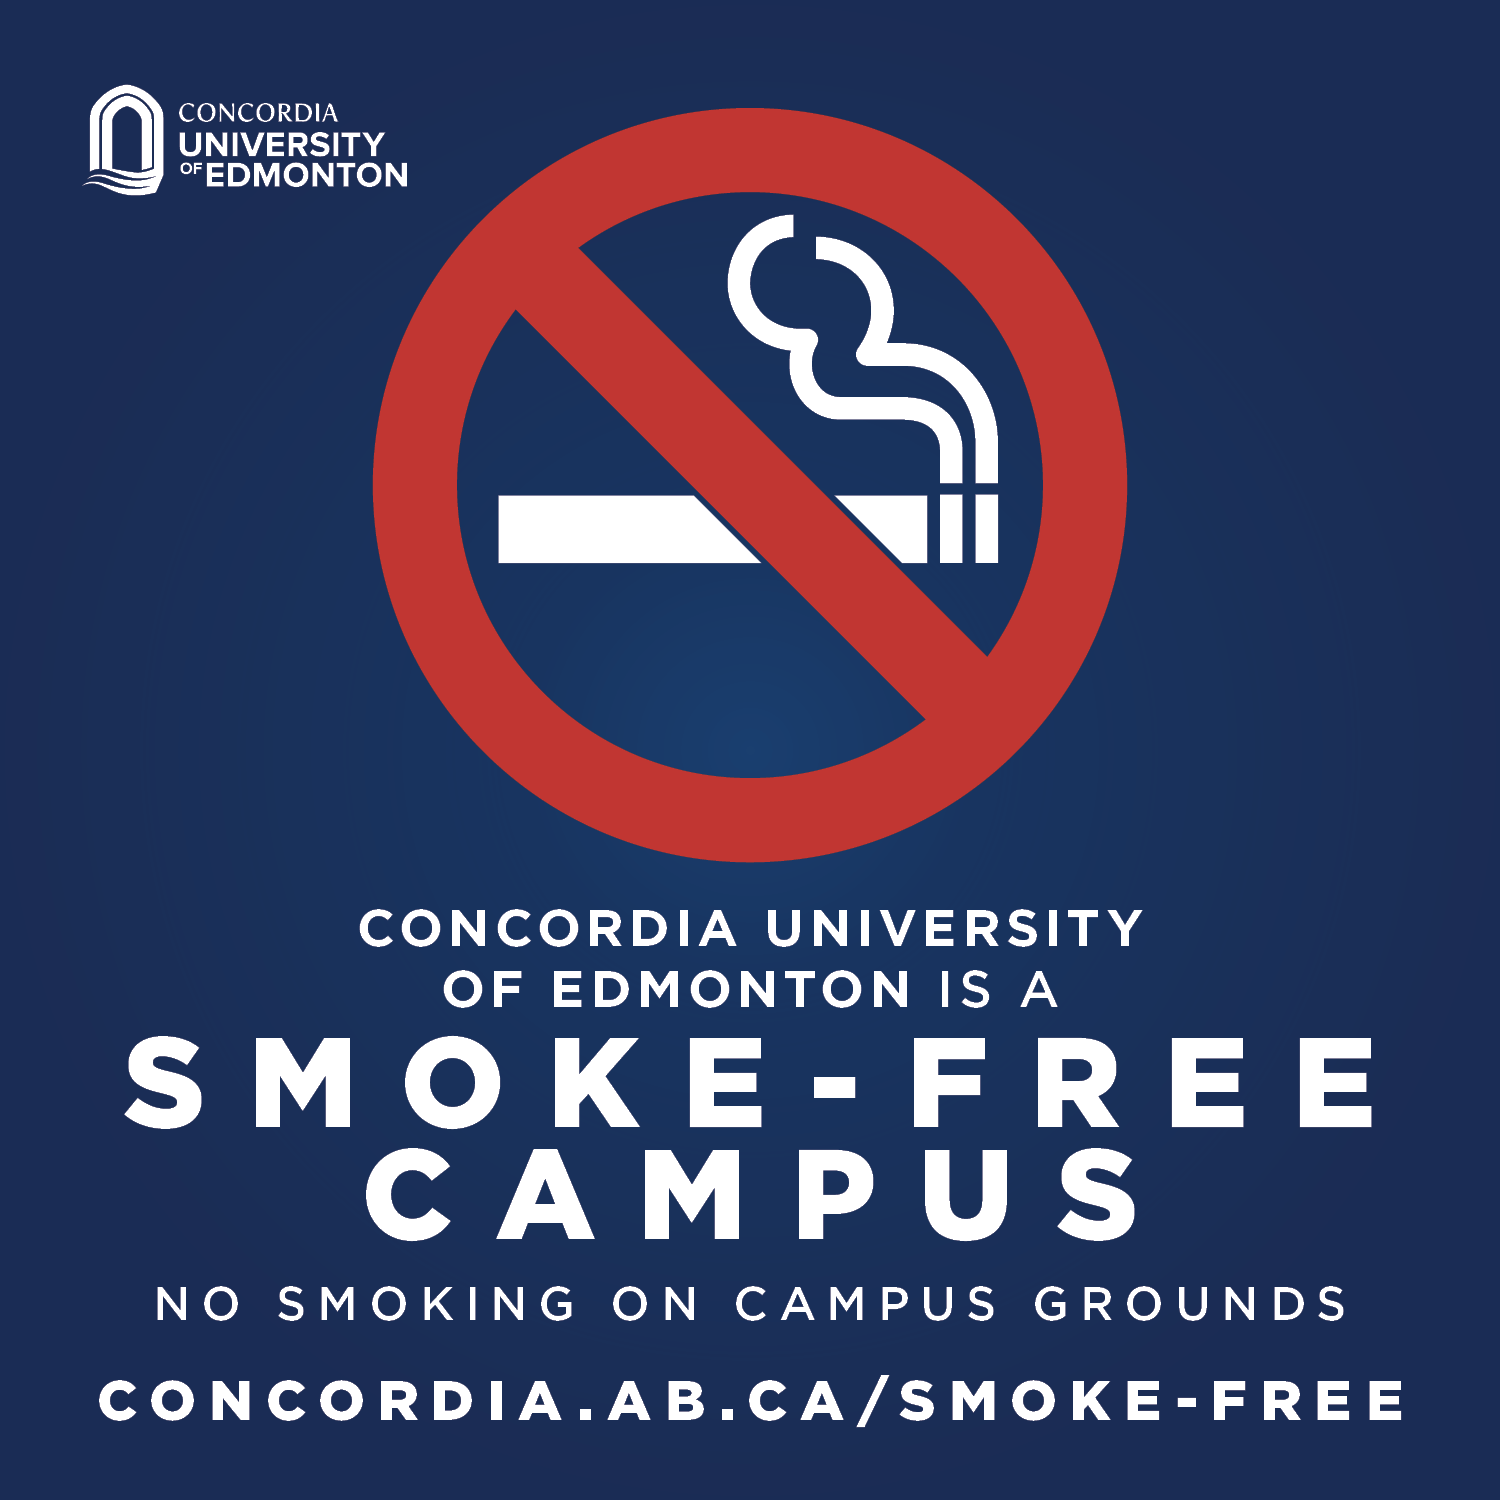 Concordia University of Edmonton is a smoke-free campus